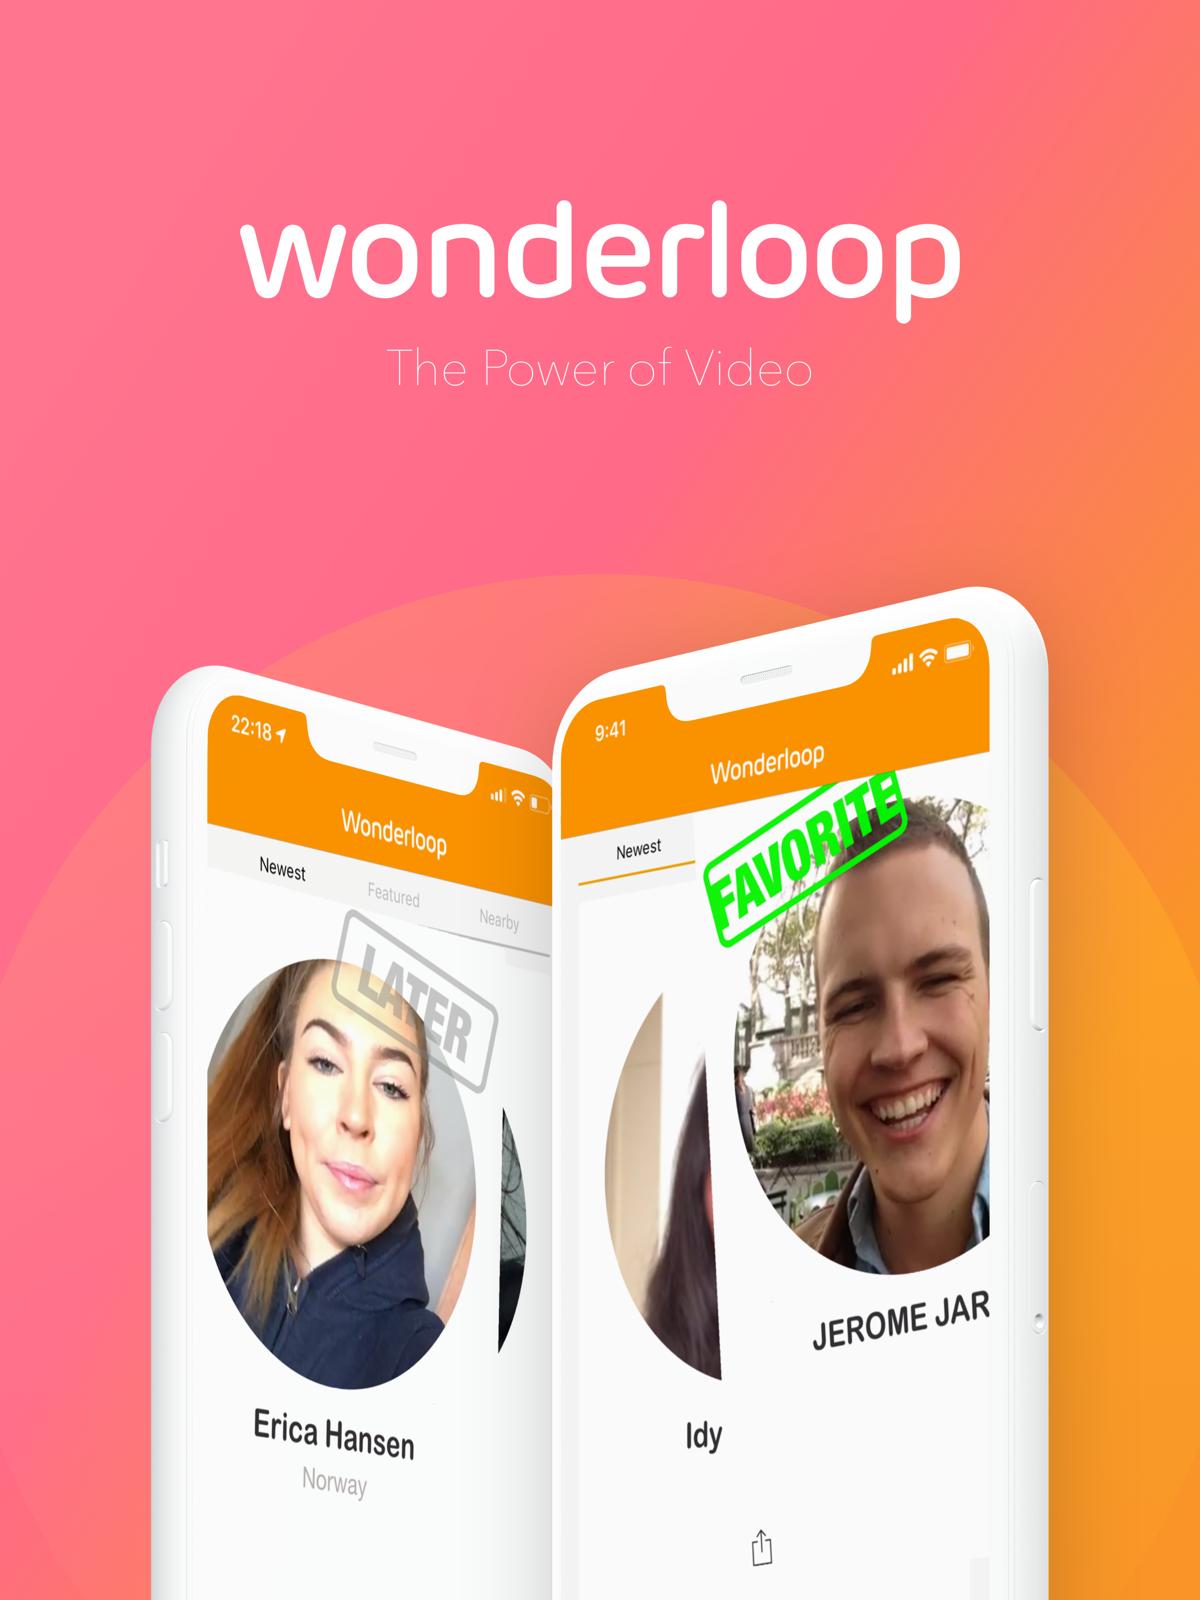 Wonderloop’s networking app lets you swipe left on video profiles instead of pictures